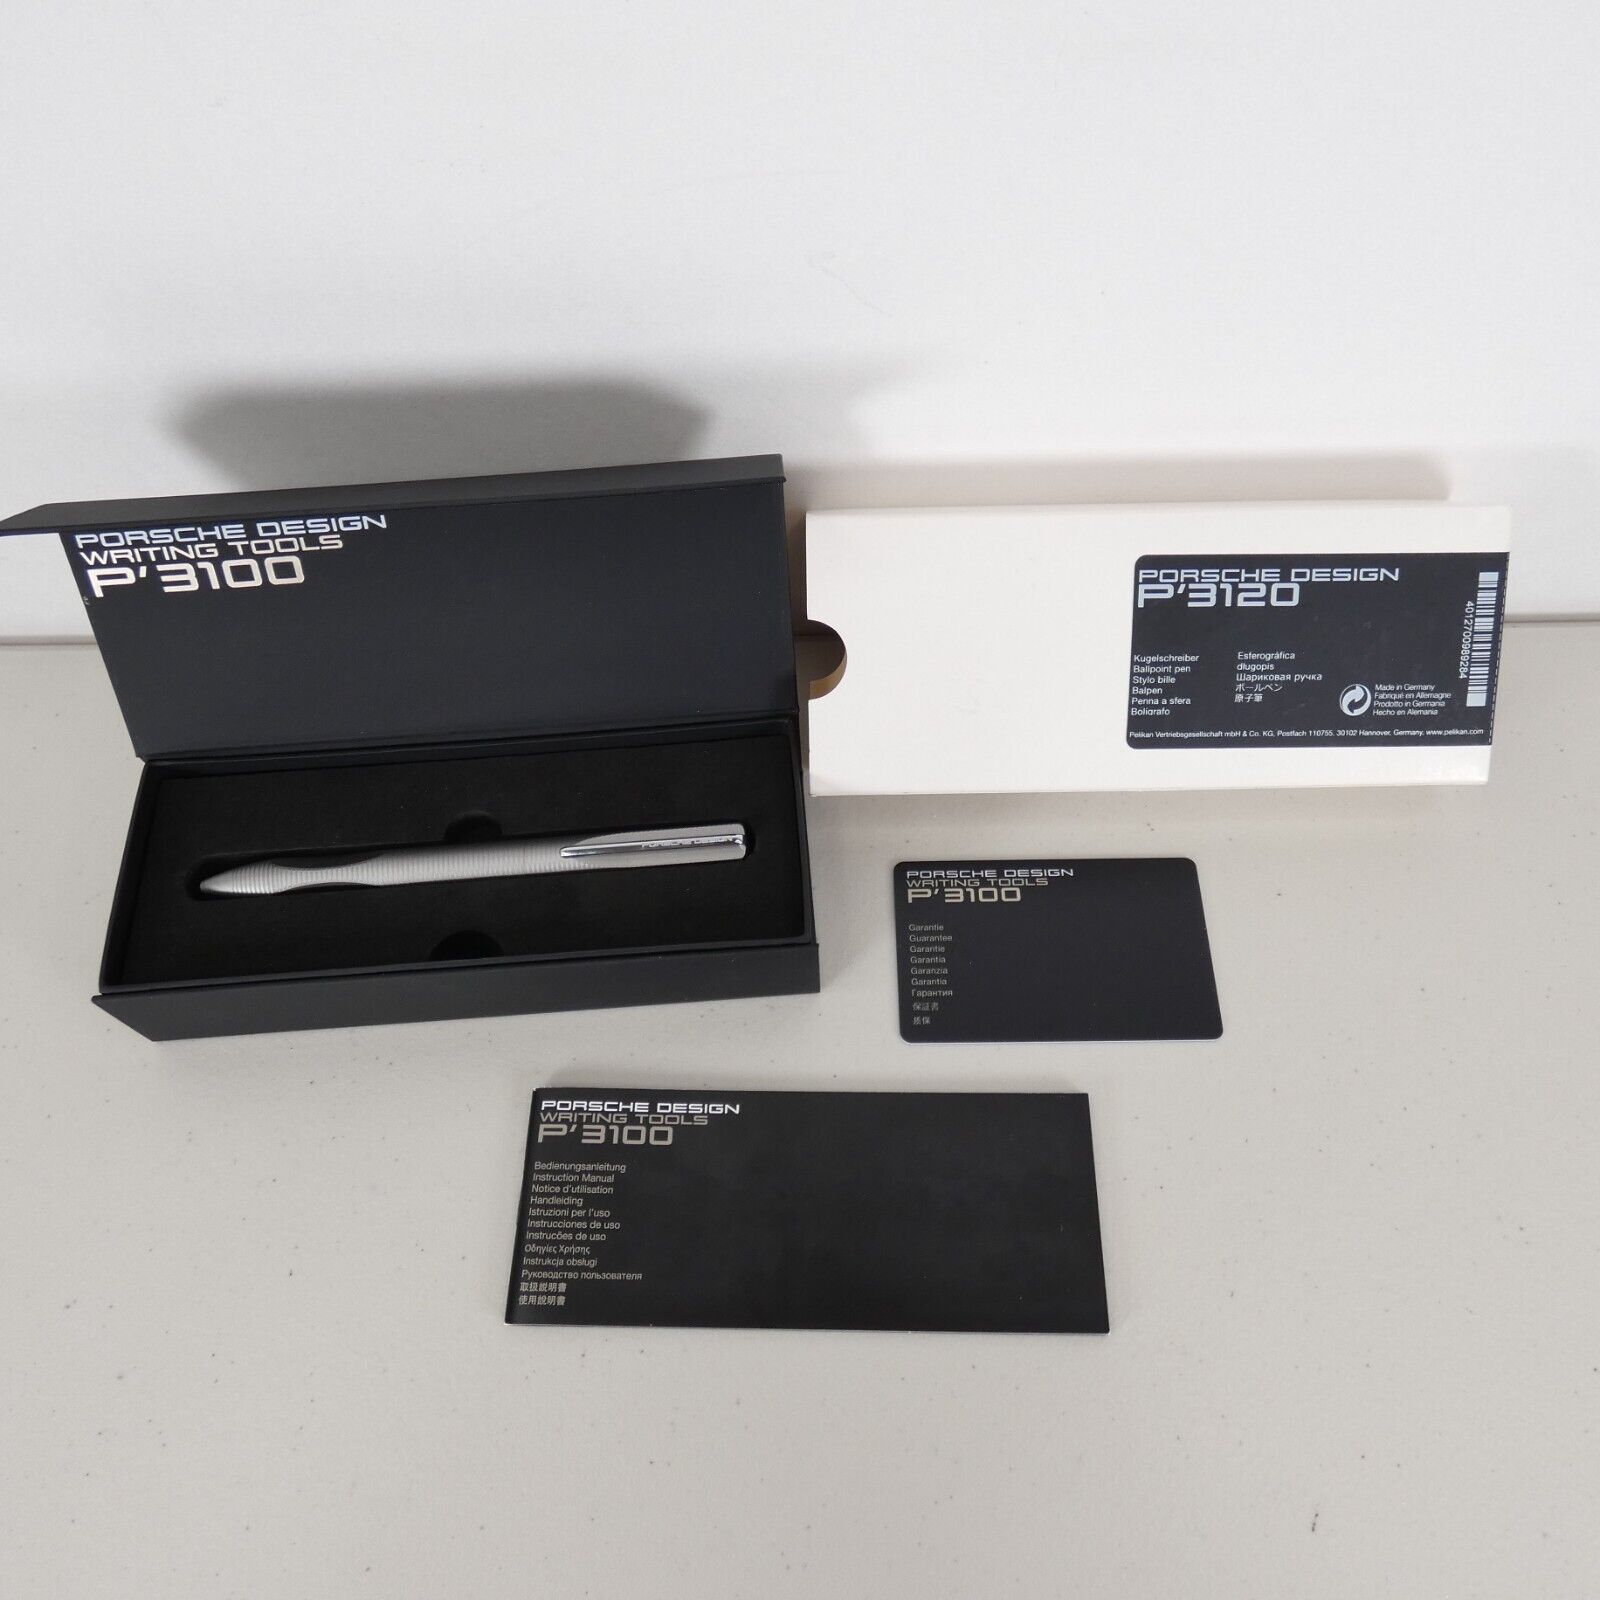 PORSCHE DESIGN P'3120 Aluminum Titanium 989285 w/ Box & Manual - Mint